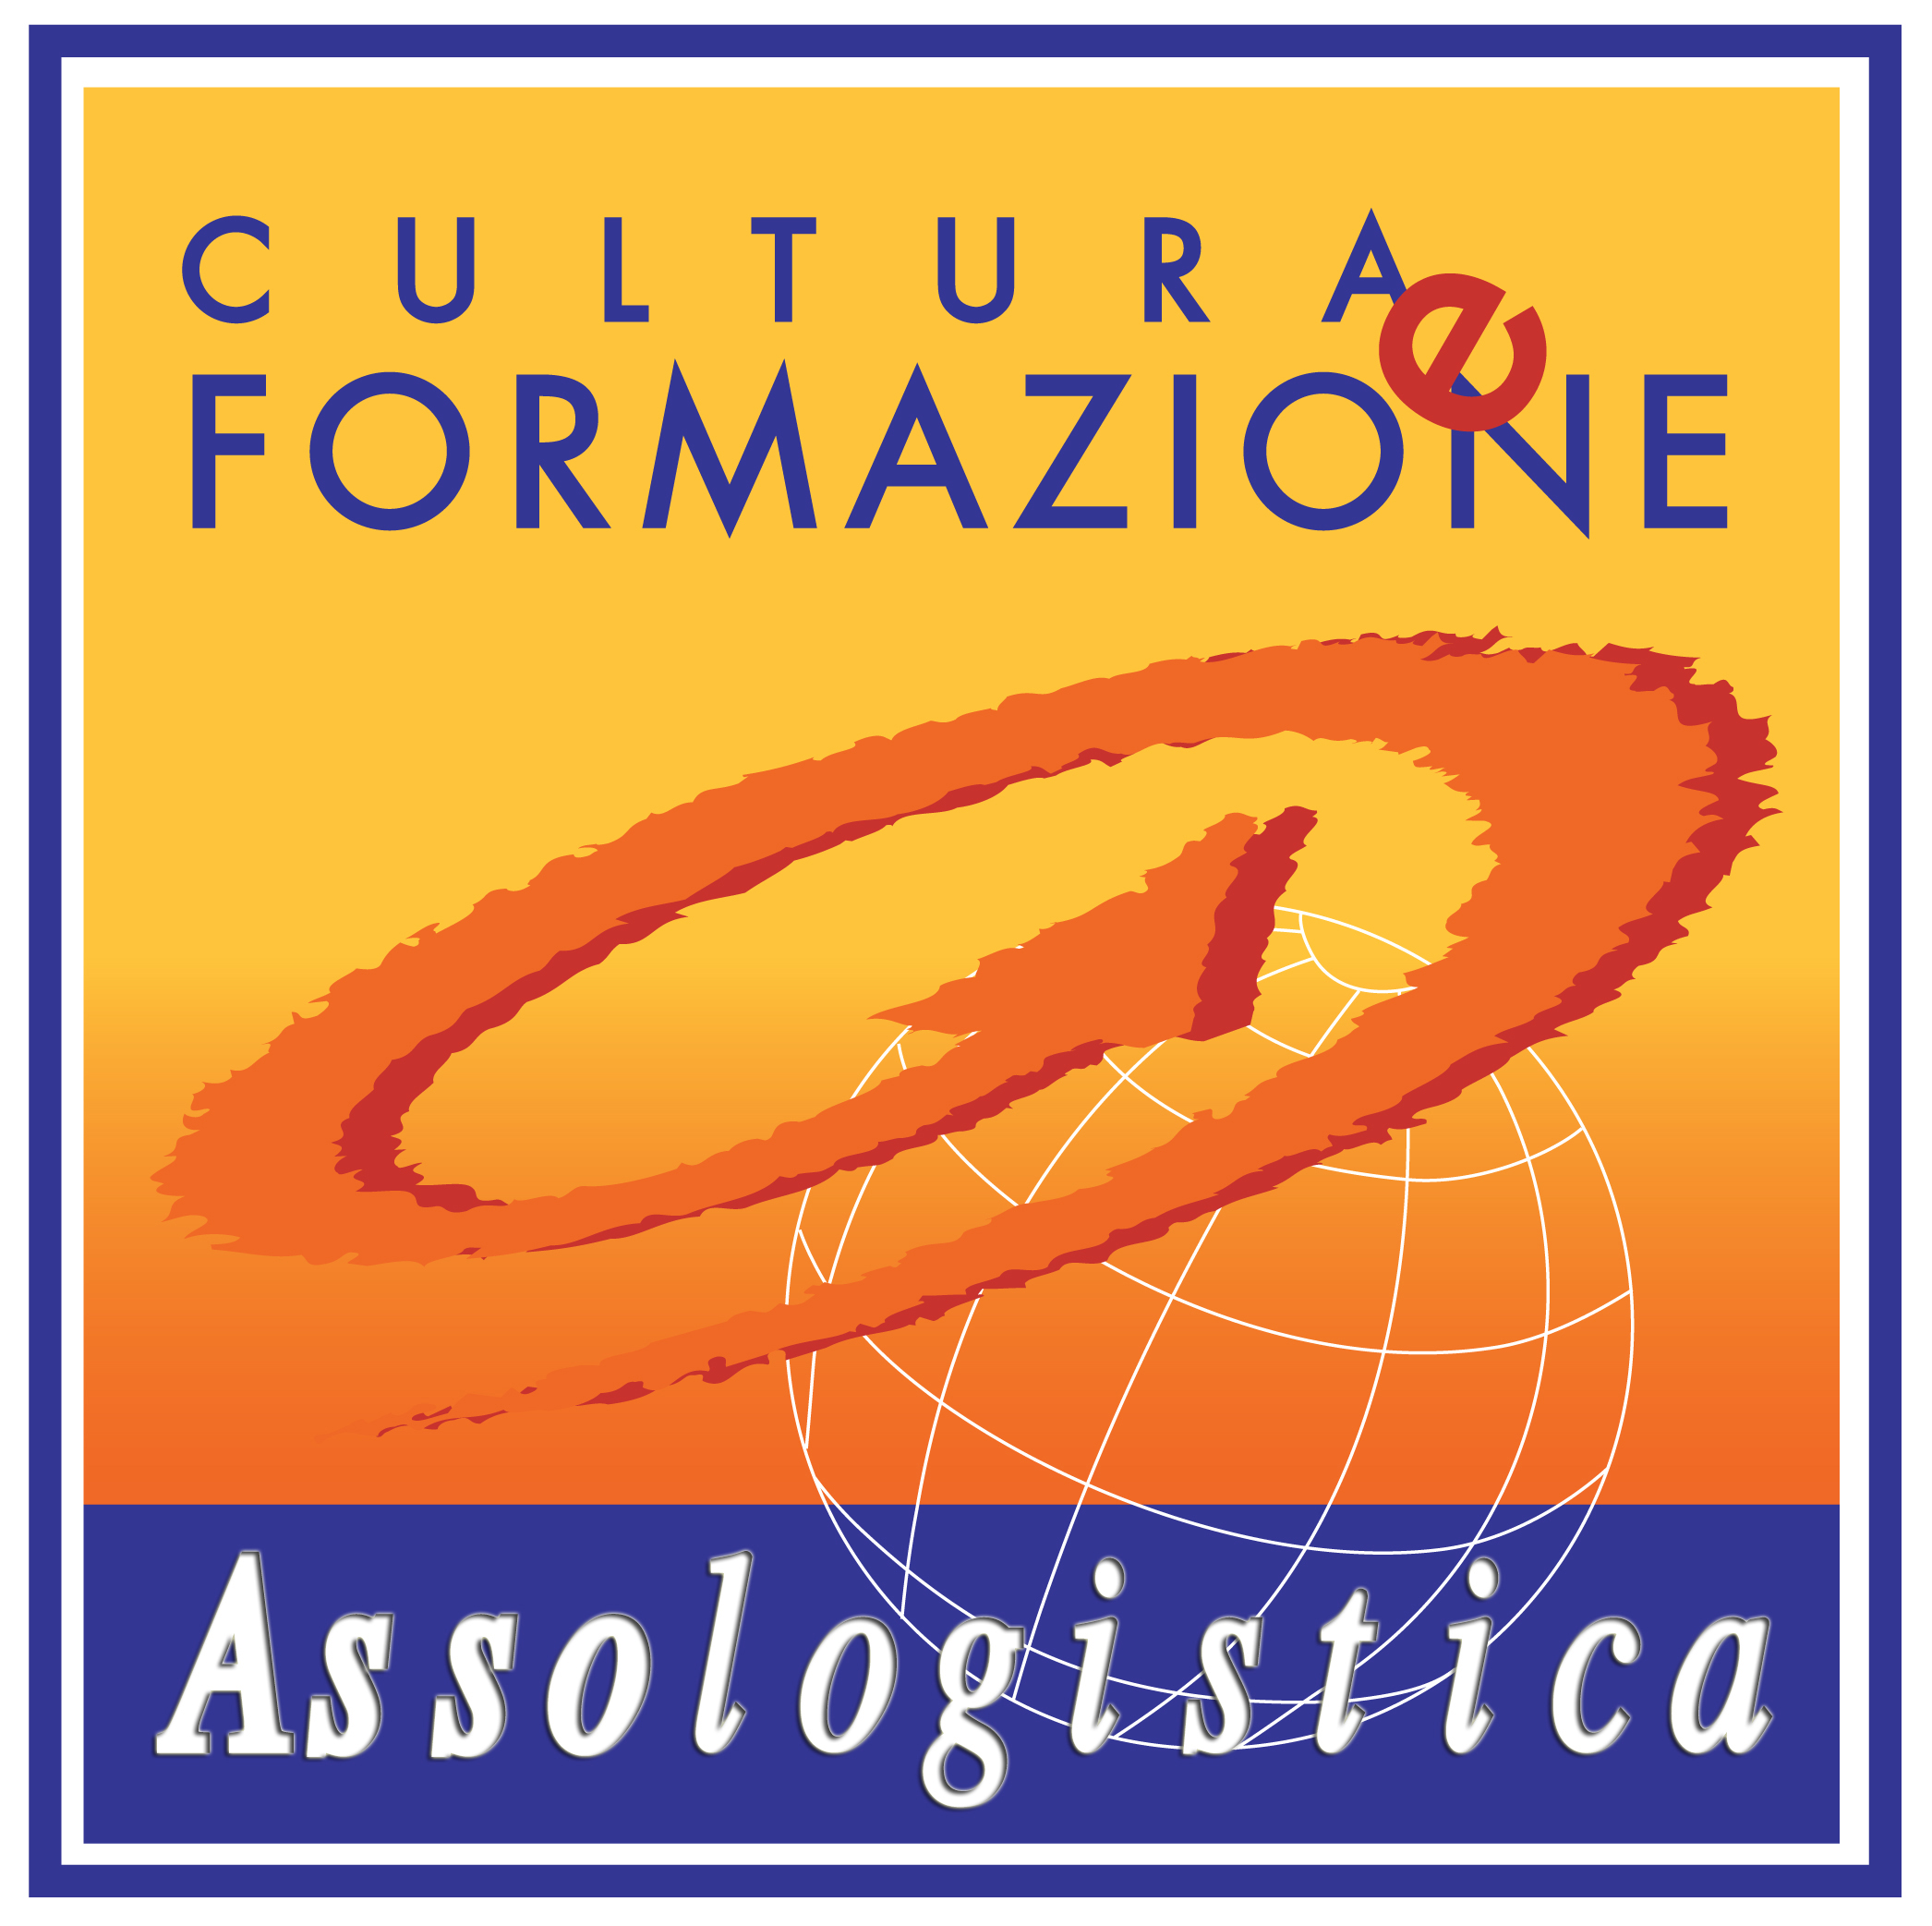 Assologistica - Cultira e Formazione